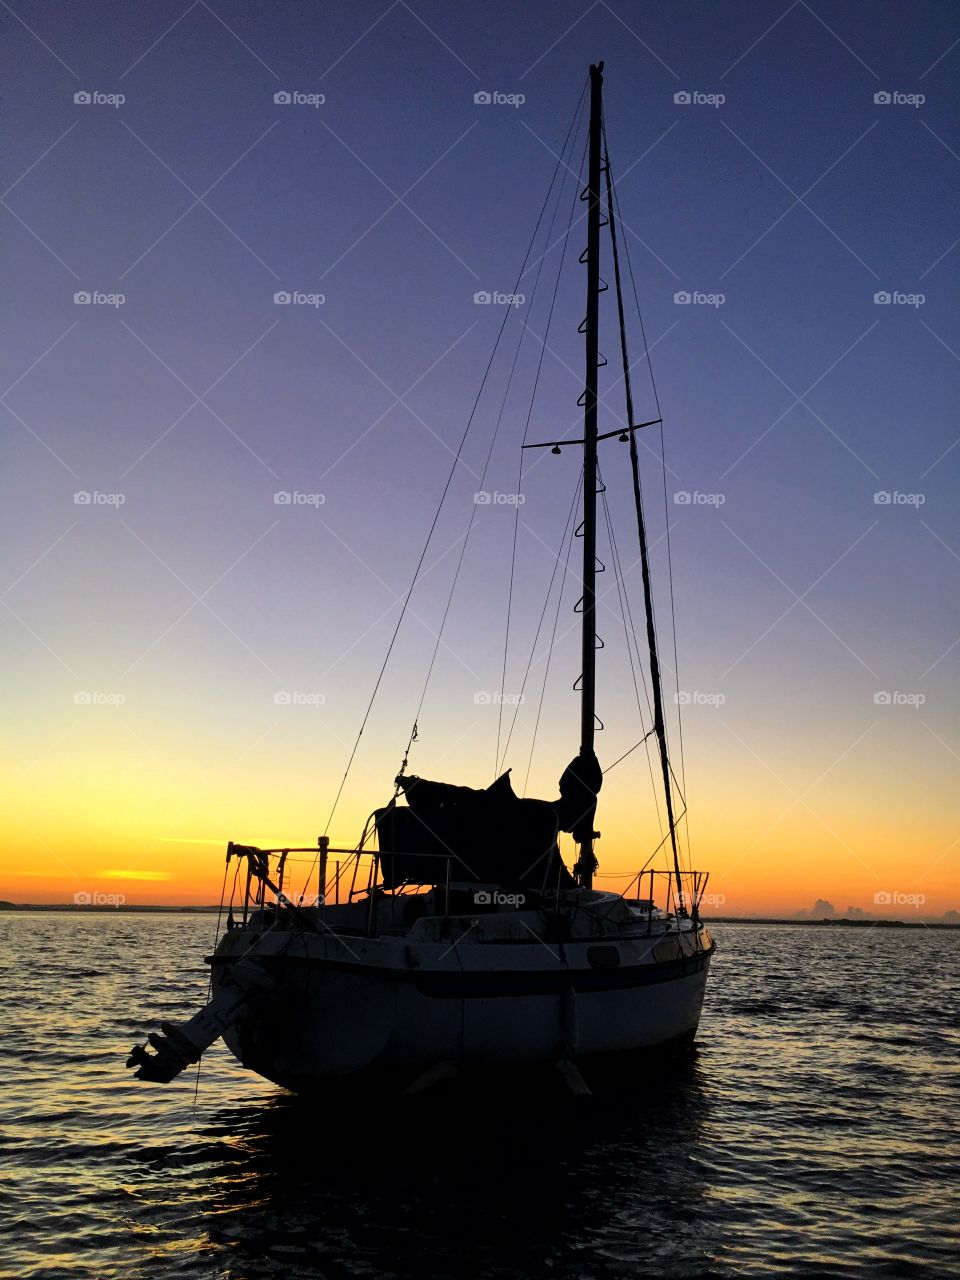 Water, Sailboat, Sea, Boat, Sunset